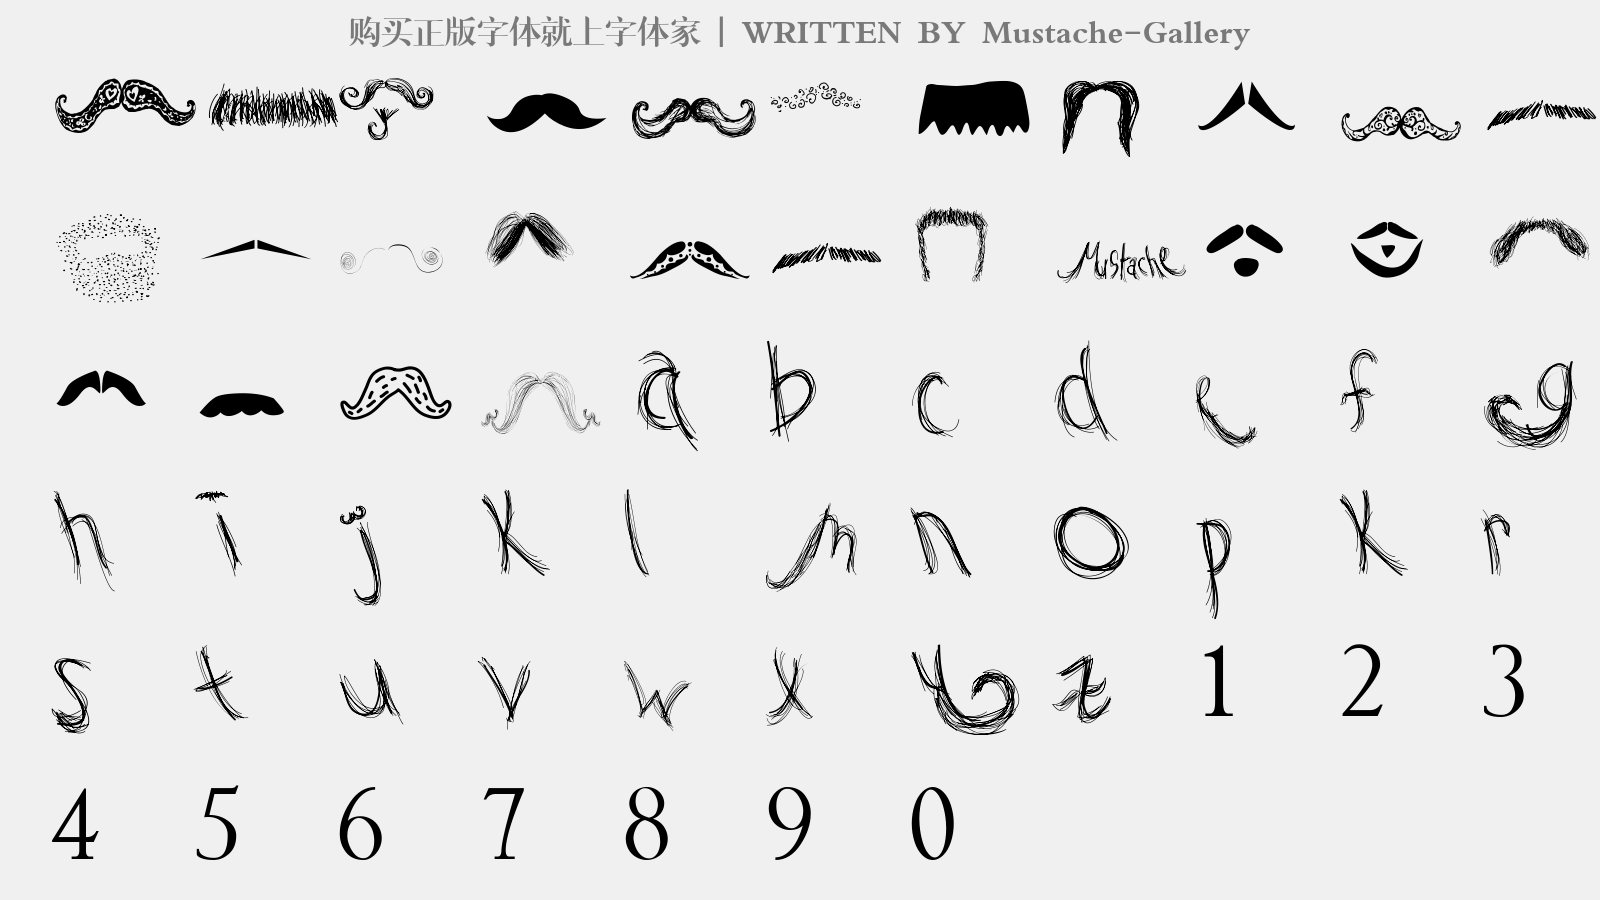 Mustache-Gallery - 大写字母/小写字母/数字